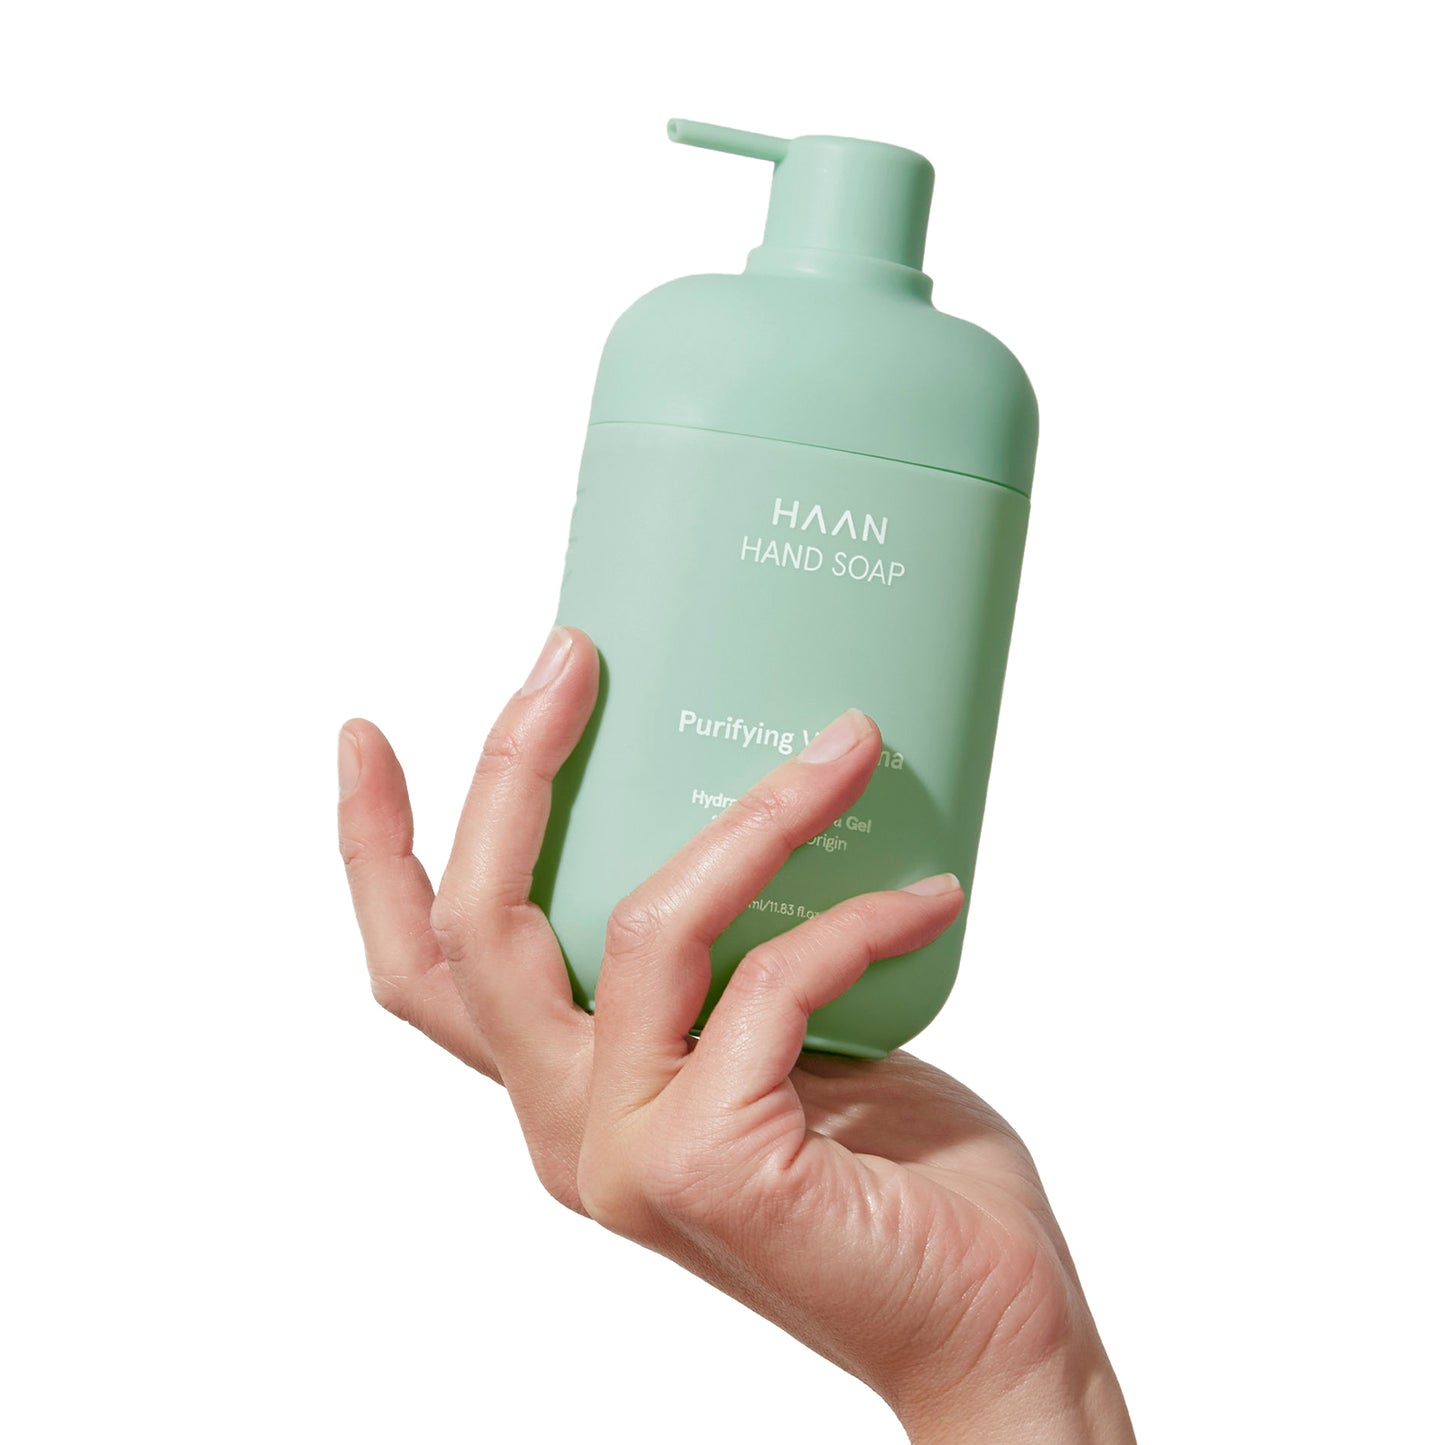 Hand Soap Purifying Verbena